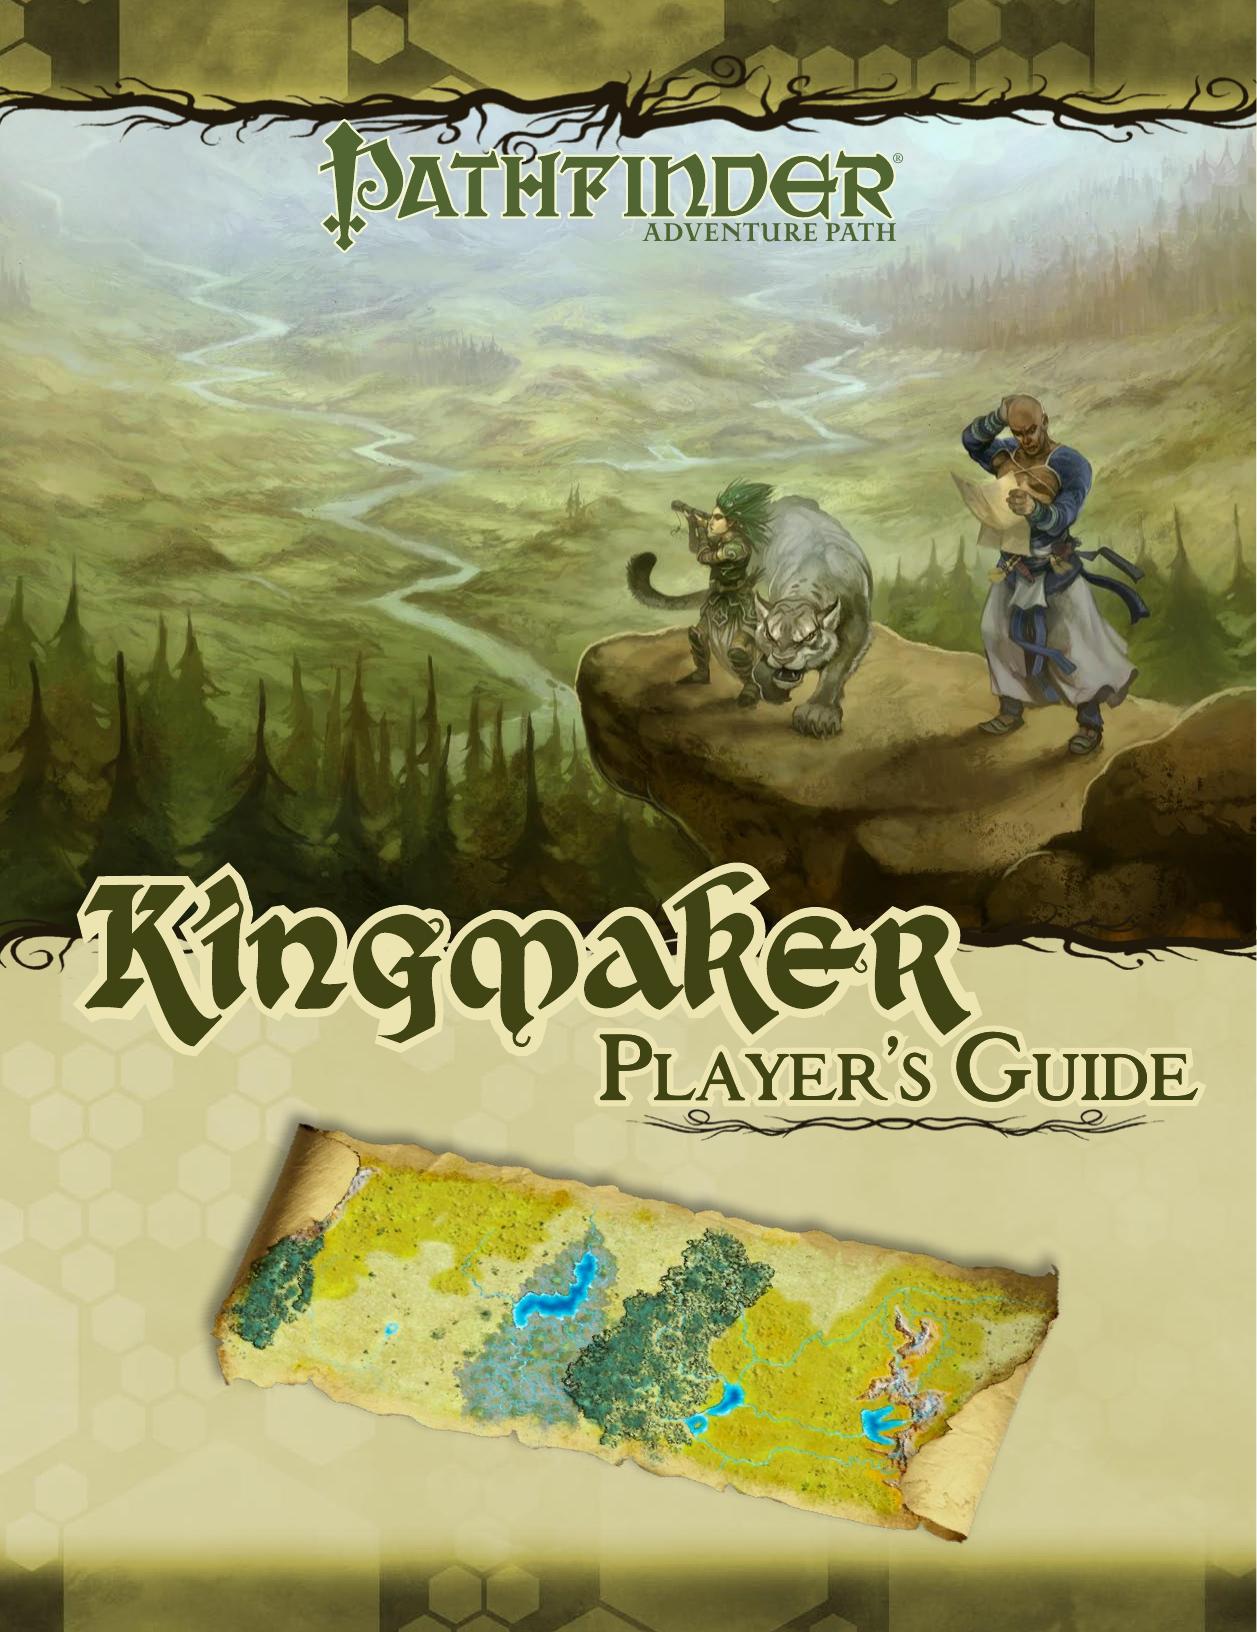 Kingmaker Player's Guide